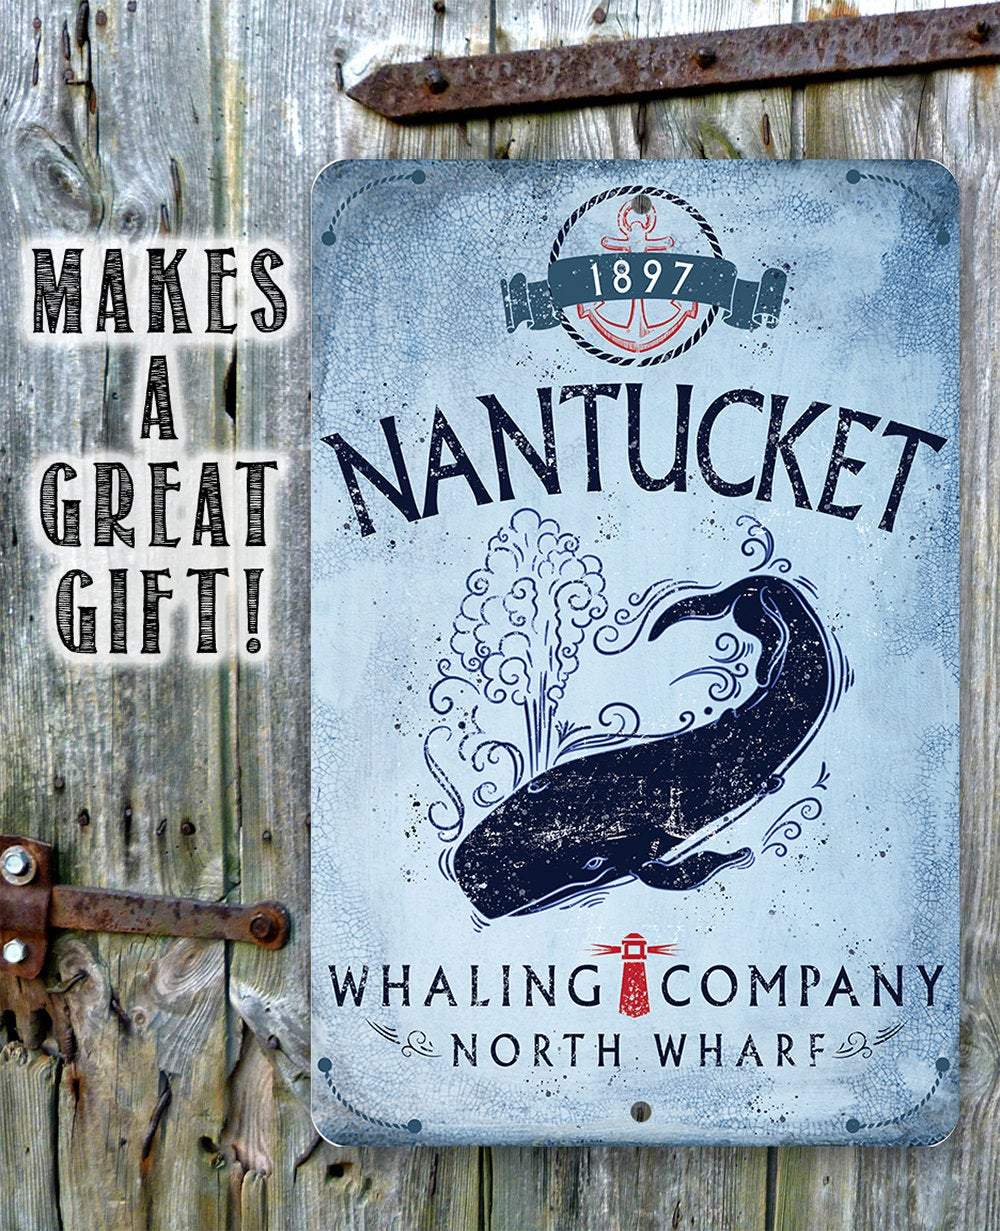 Nantucket Whaling Company - Metal Sign | Lone Star Art.